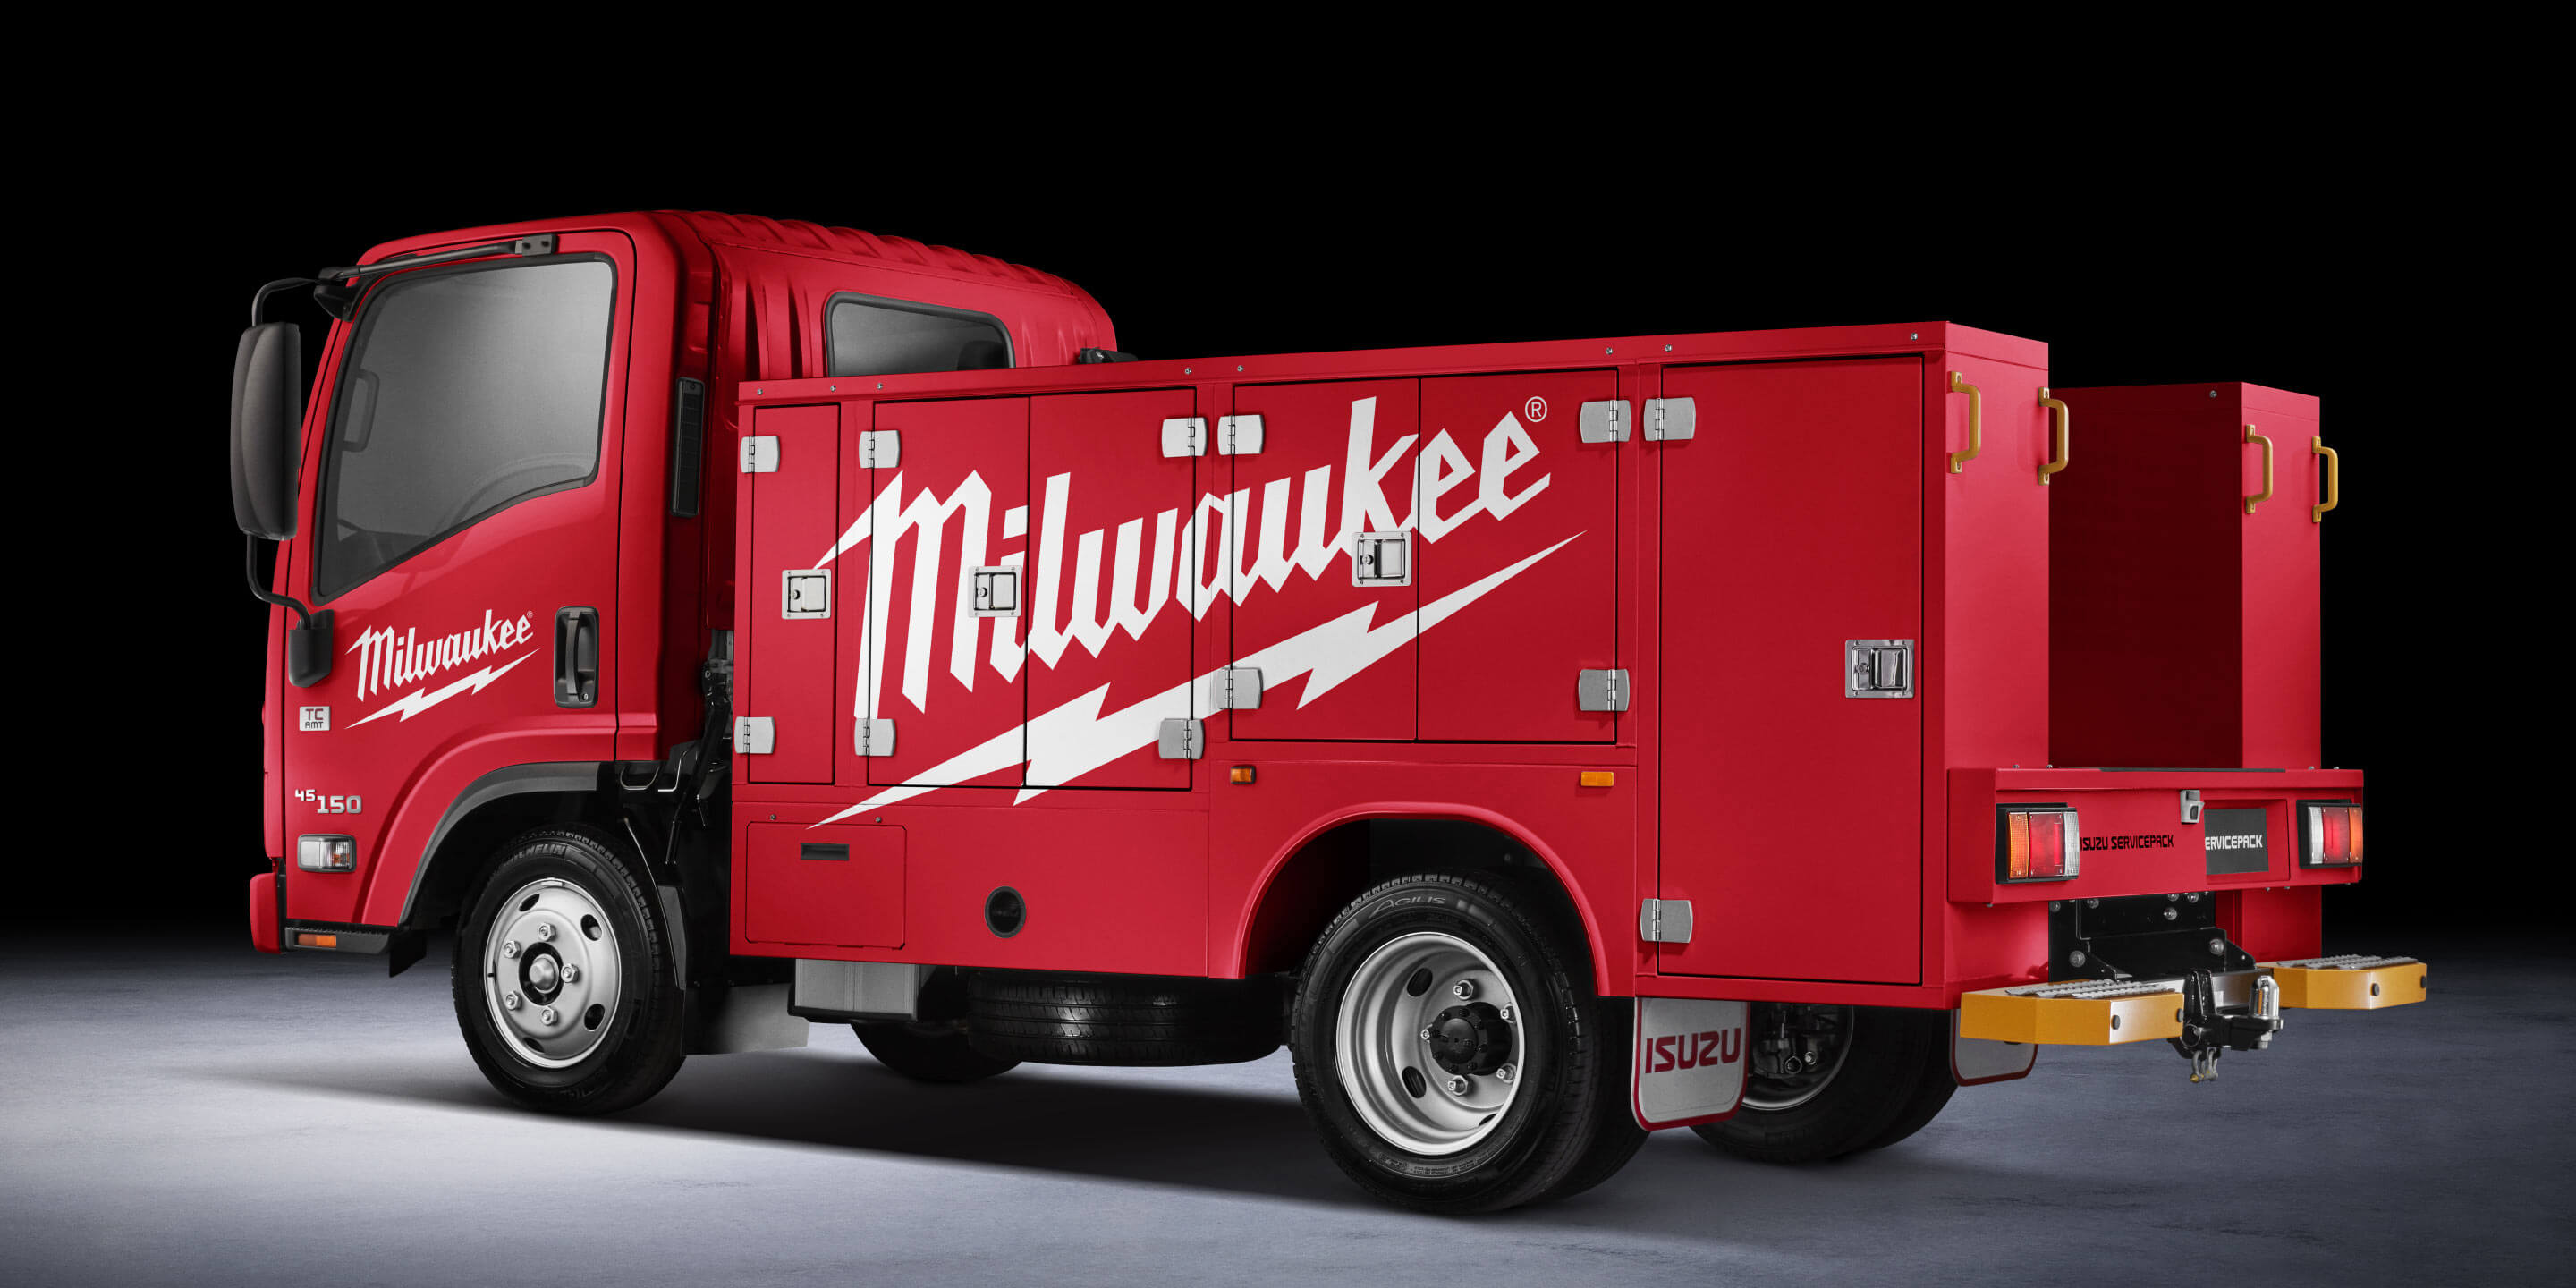 Isuzu - Milwaukee truckload of tools competition